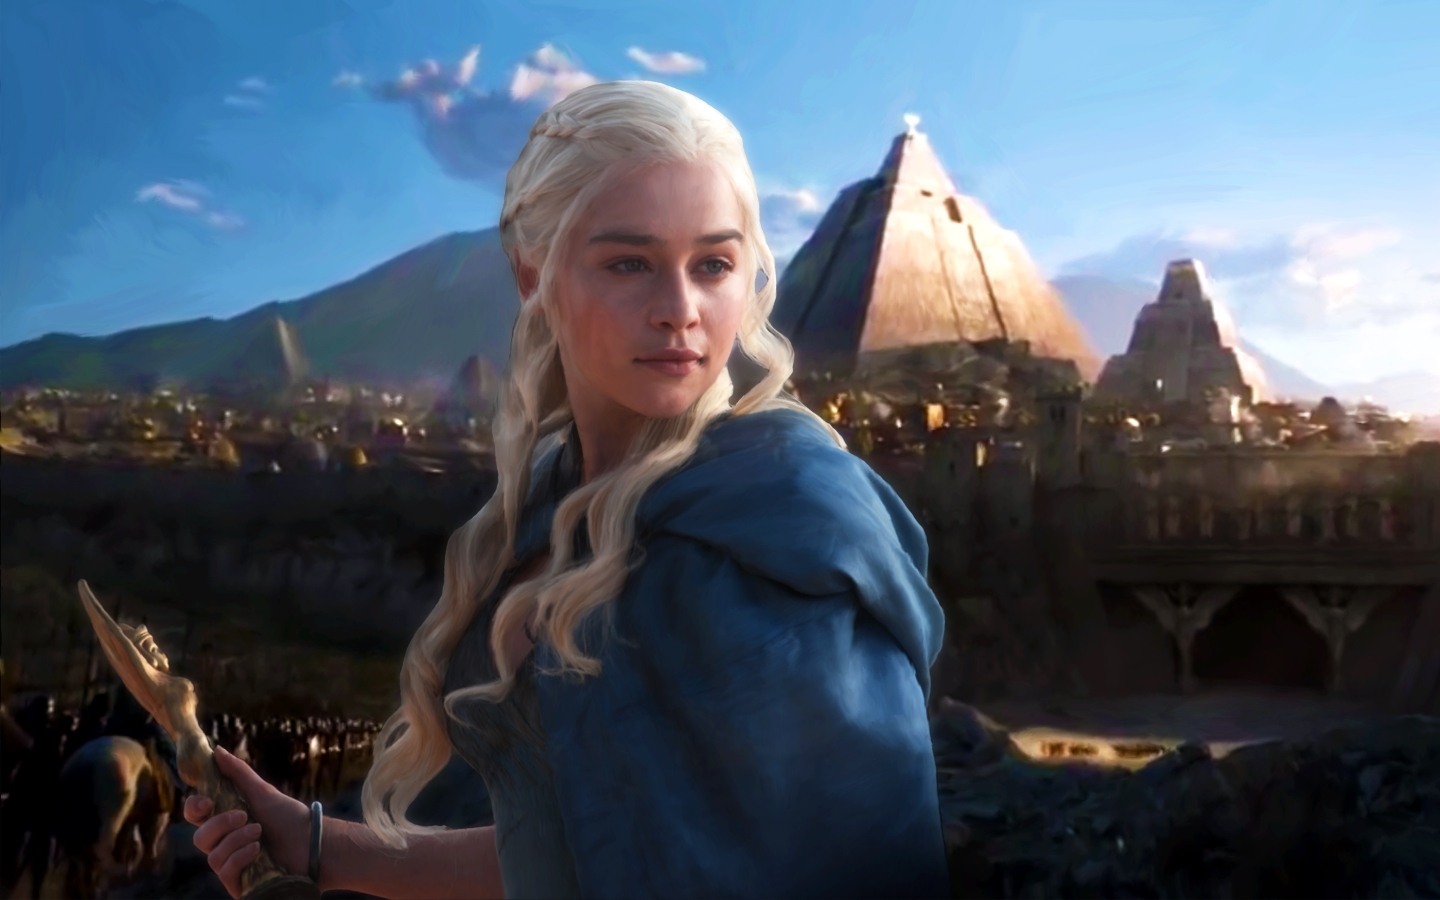 Daenerys Targaryen Fan Art for 1440 x 900 widescreen resolution